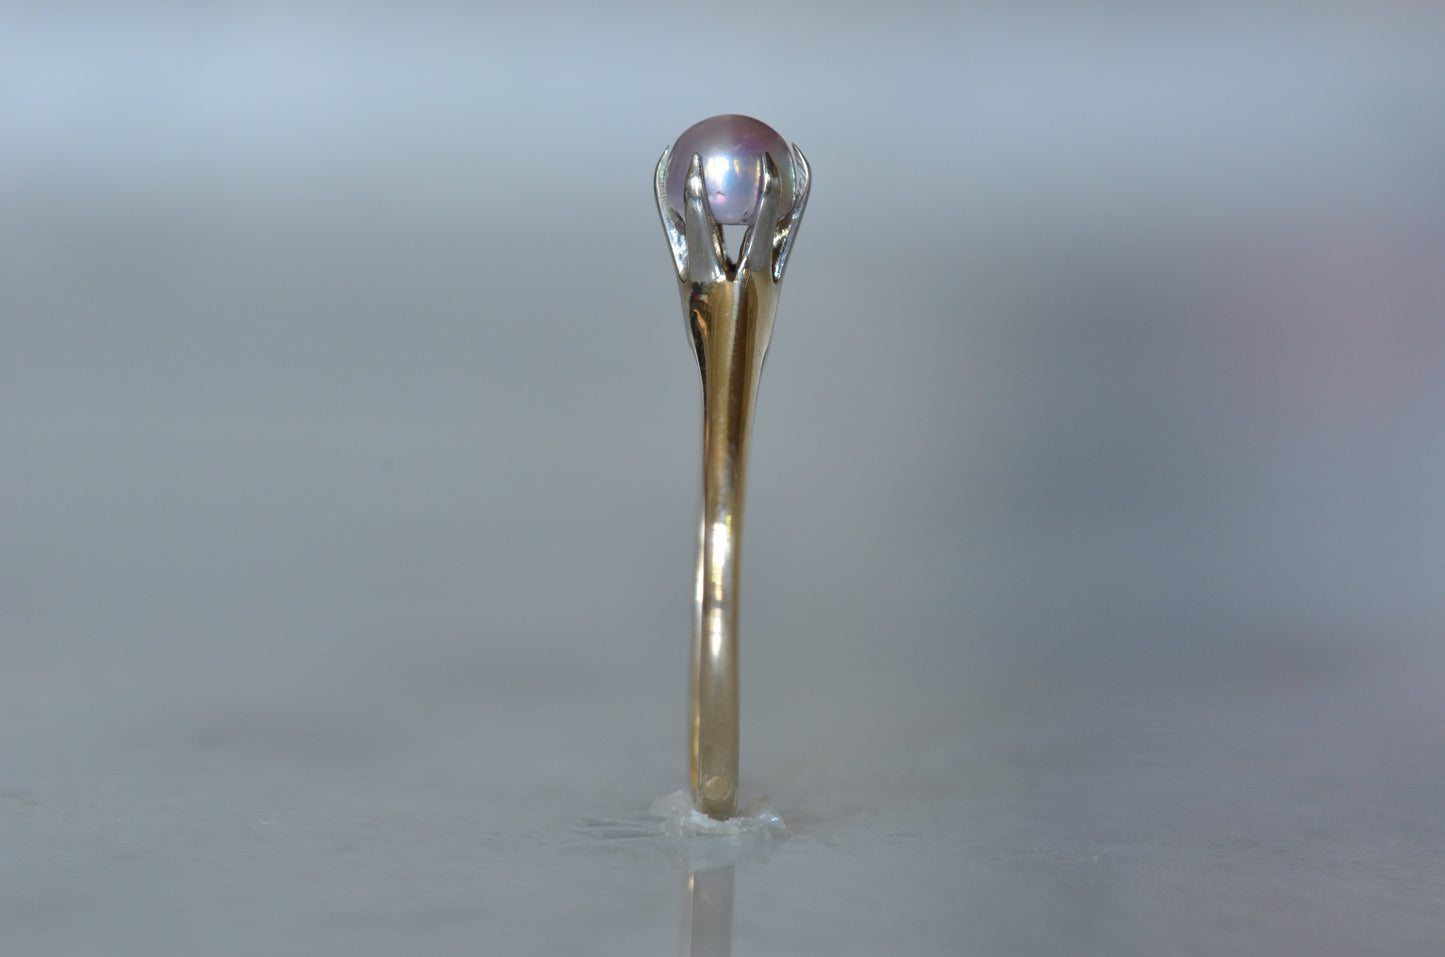 Petite Lavender Pearl Belcher Ring